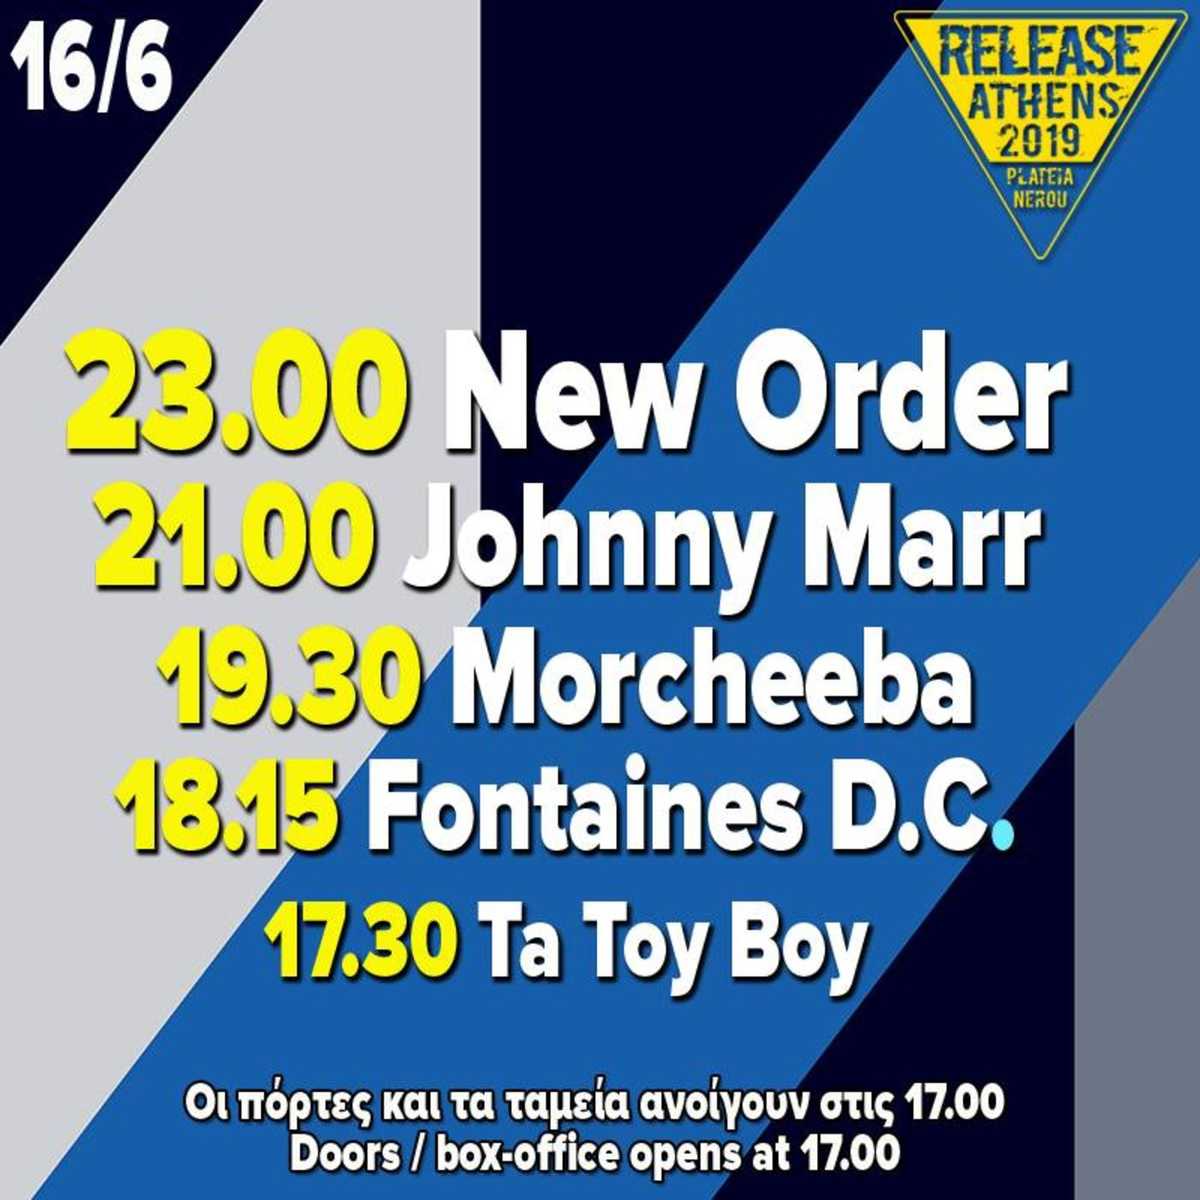 Release Athens 2019: Ώρες εμφανίσεων των New Order, Johnny Marr, Morcheeba